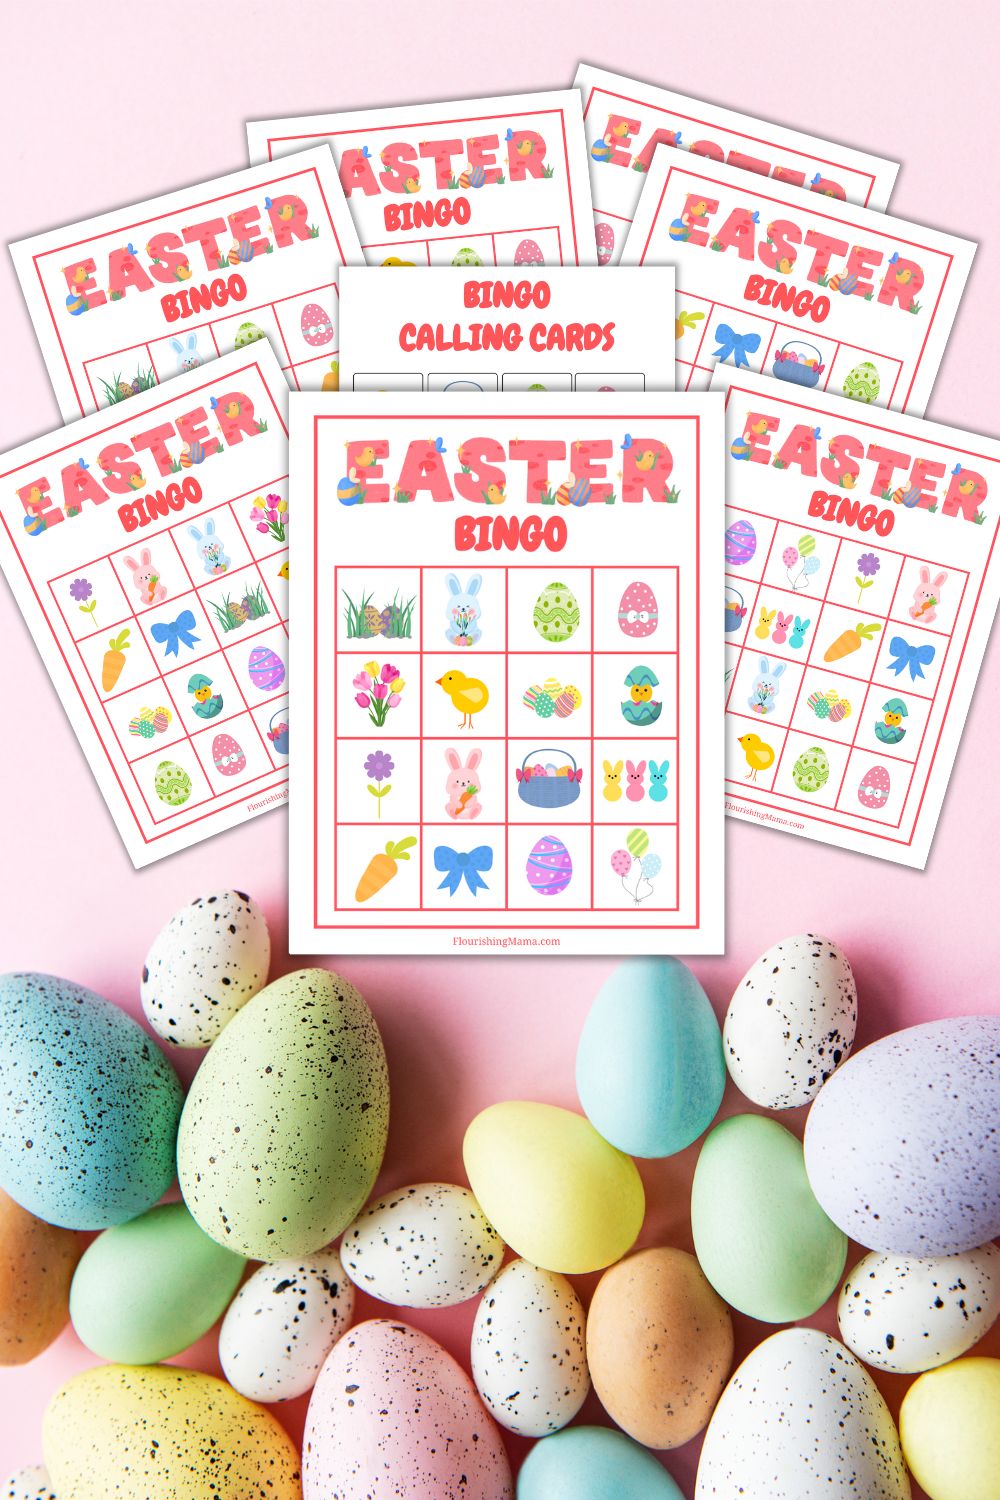 Easter Bingo Game for Kids (free printable cards)